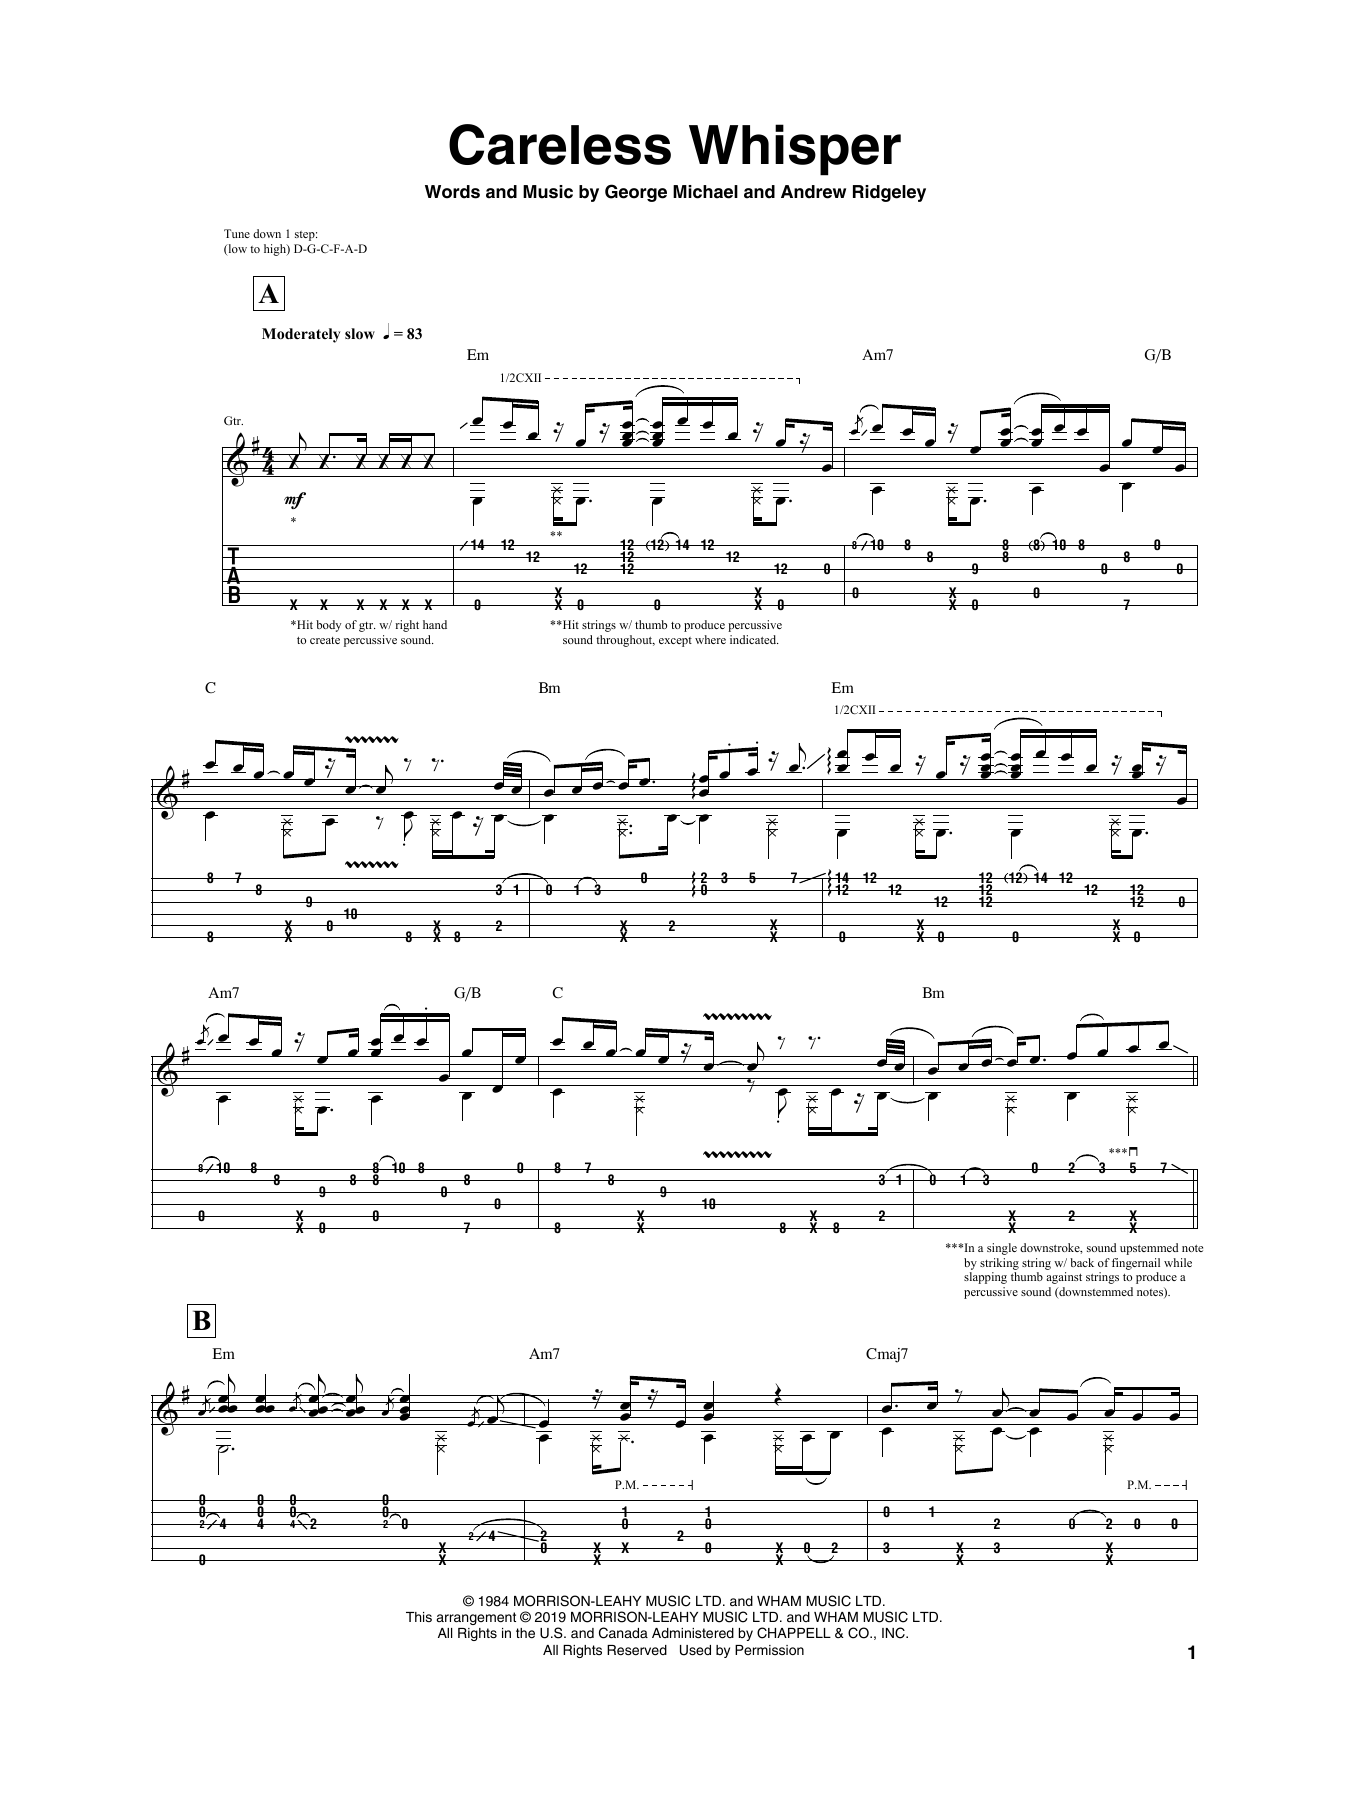 Igor Presnyakov Careless Whisper Sheet Music Notes & Chords for Guitar Tab - Download or Print PDF